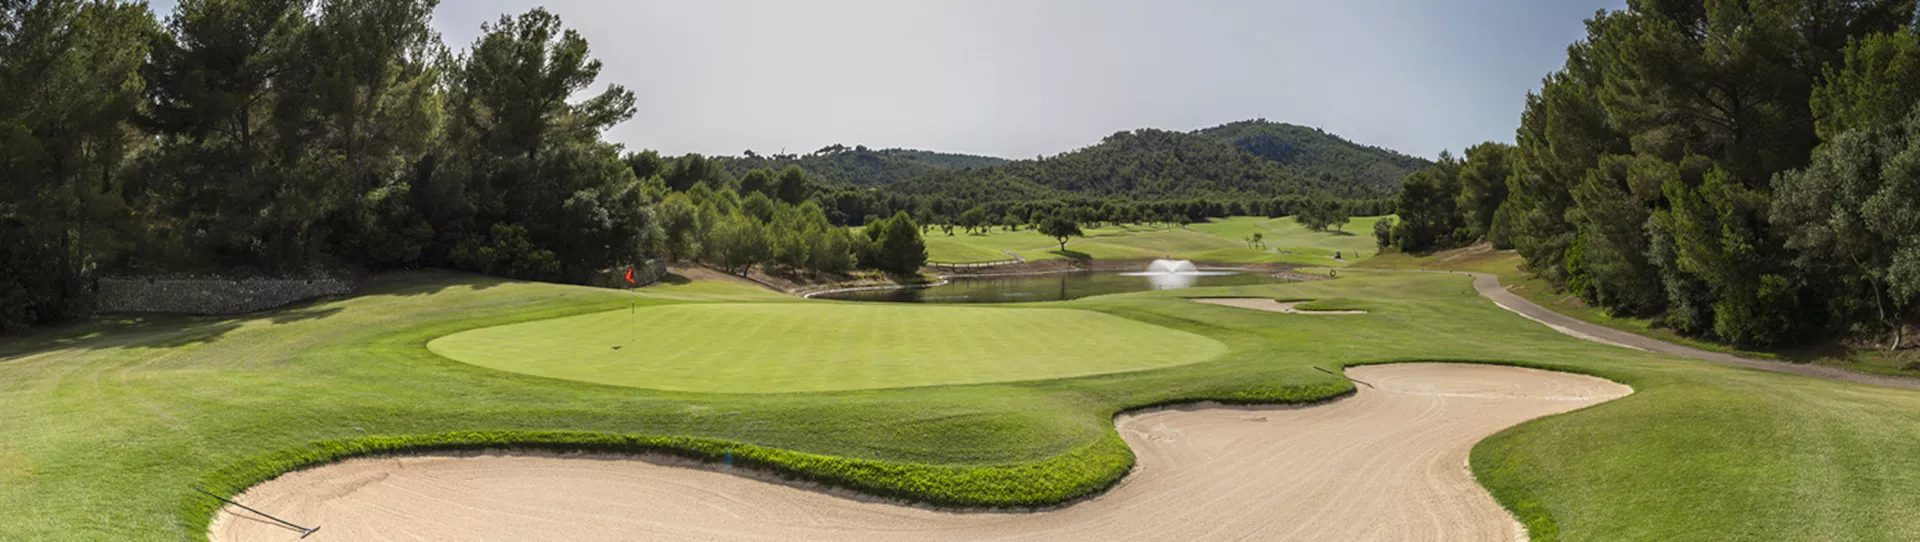 Spain golf holidays - Arabella Golf Mallorca Duo SVG+SQG - Photo 1